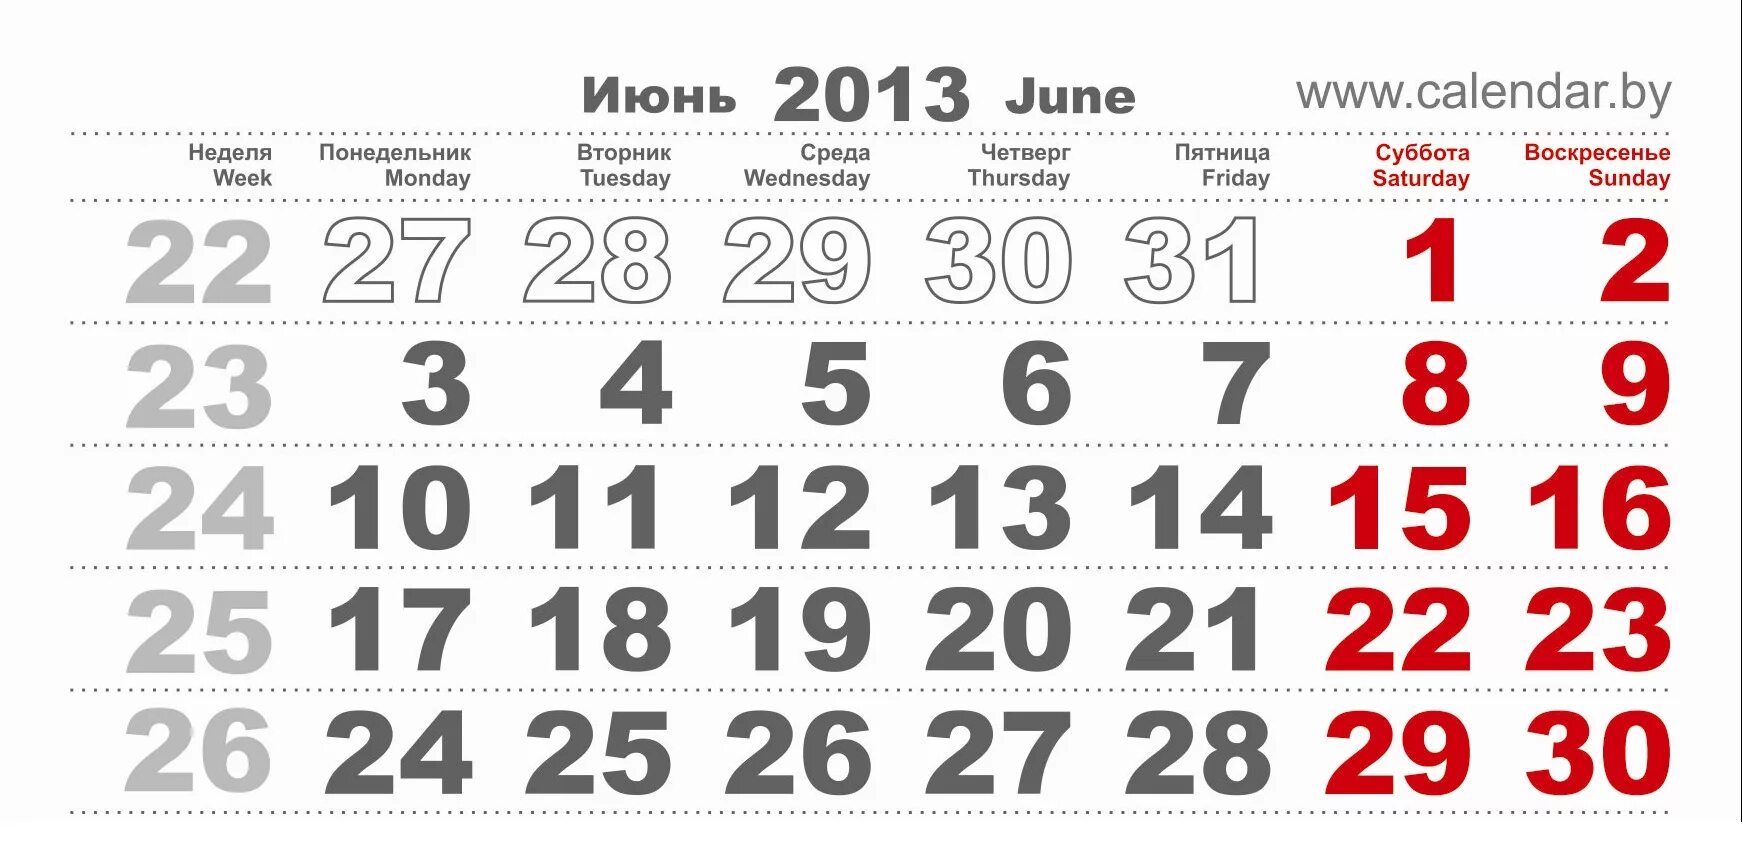 Изменения октябрь 2016. Календарь на март 2013 года. Июль 2013 года календарь. Март 2016 года. Октябрь 2016 года календарь.